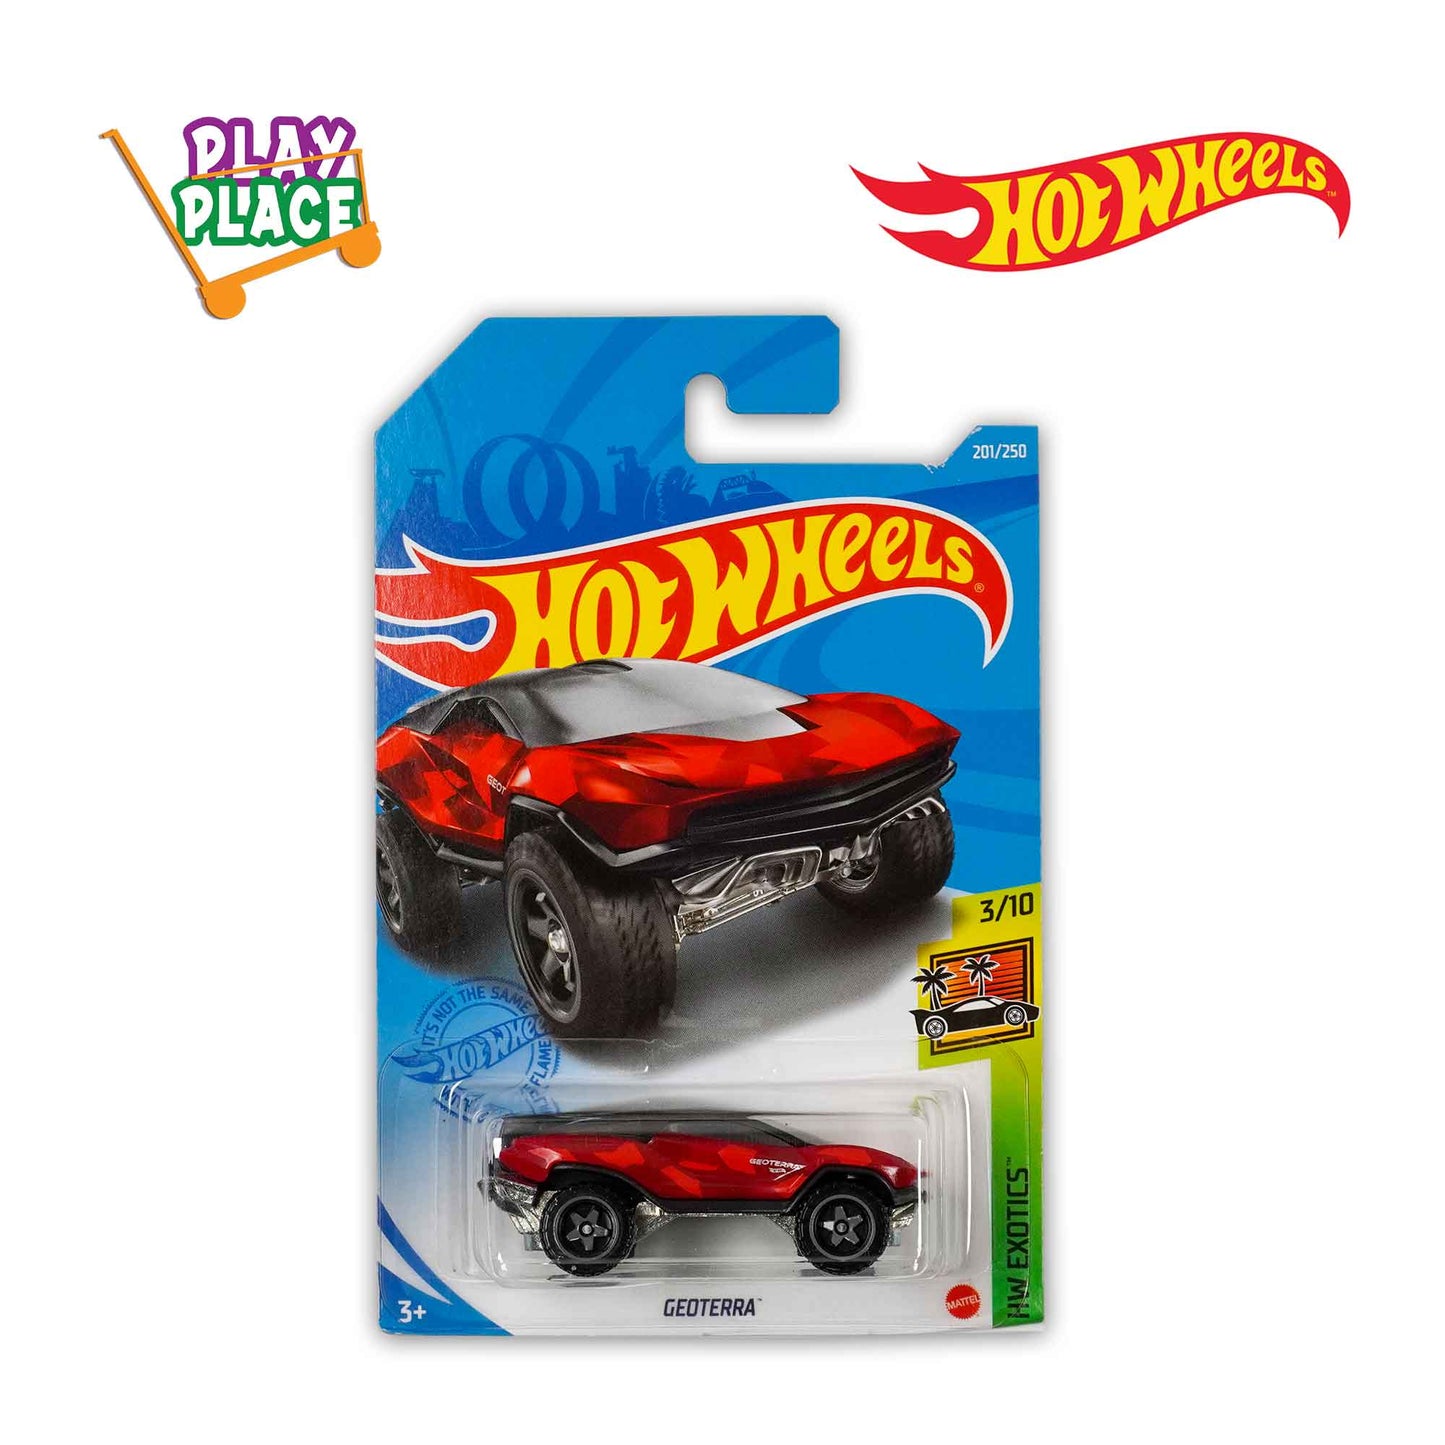 Hot Wheels Exotics Dinky Car (Assortment)